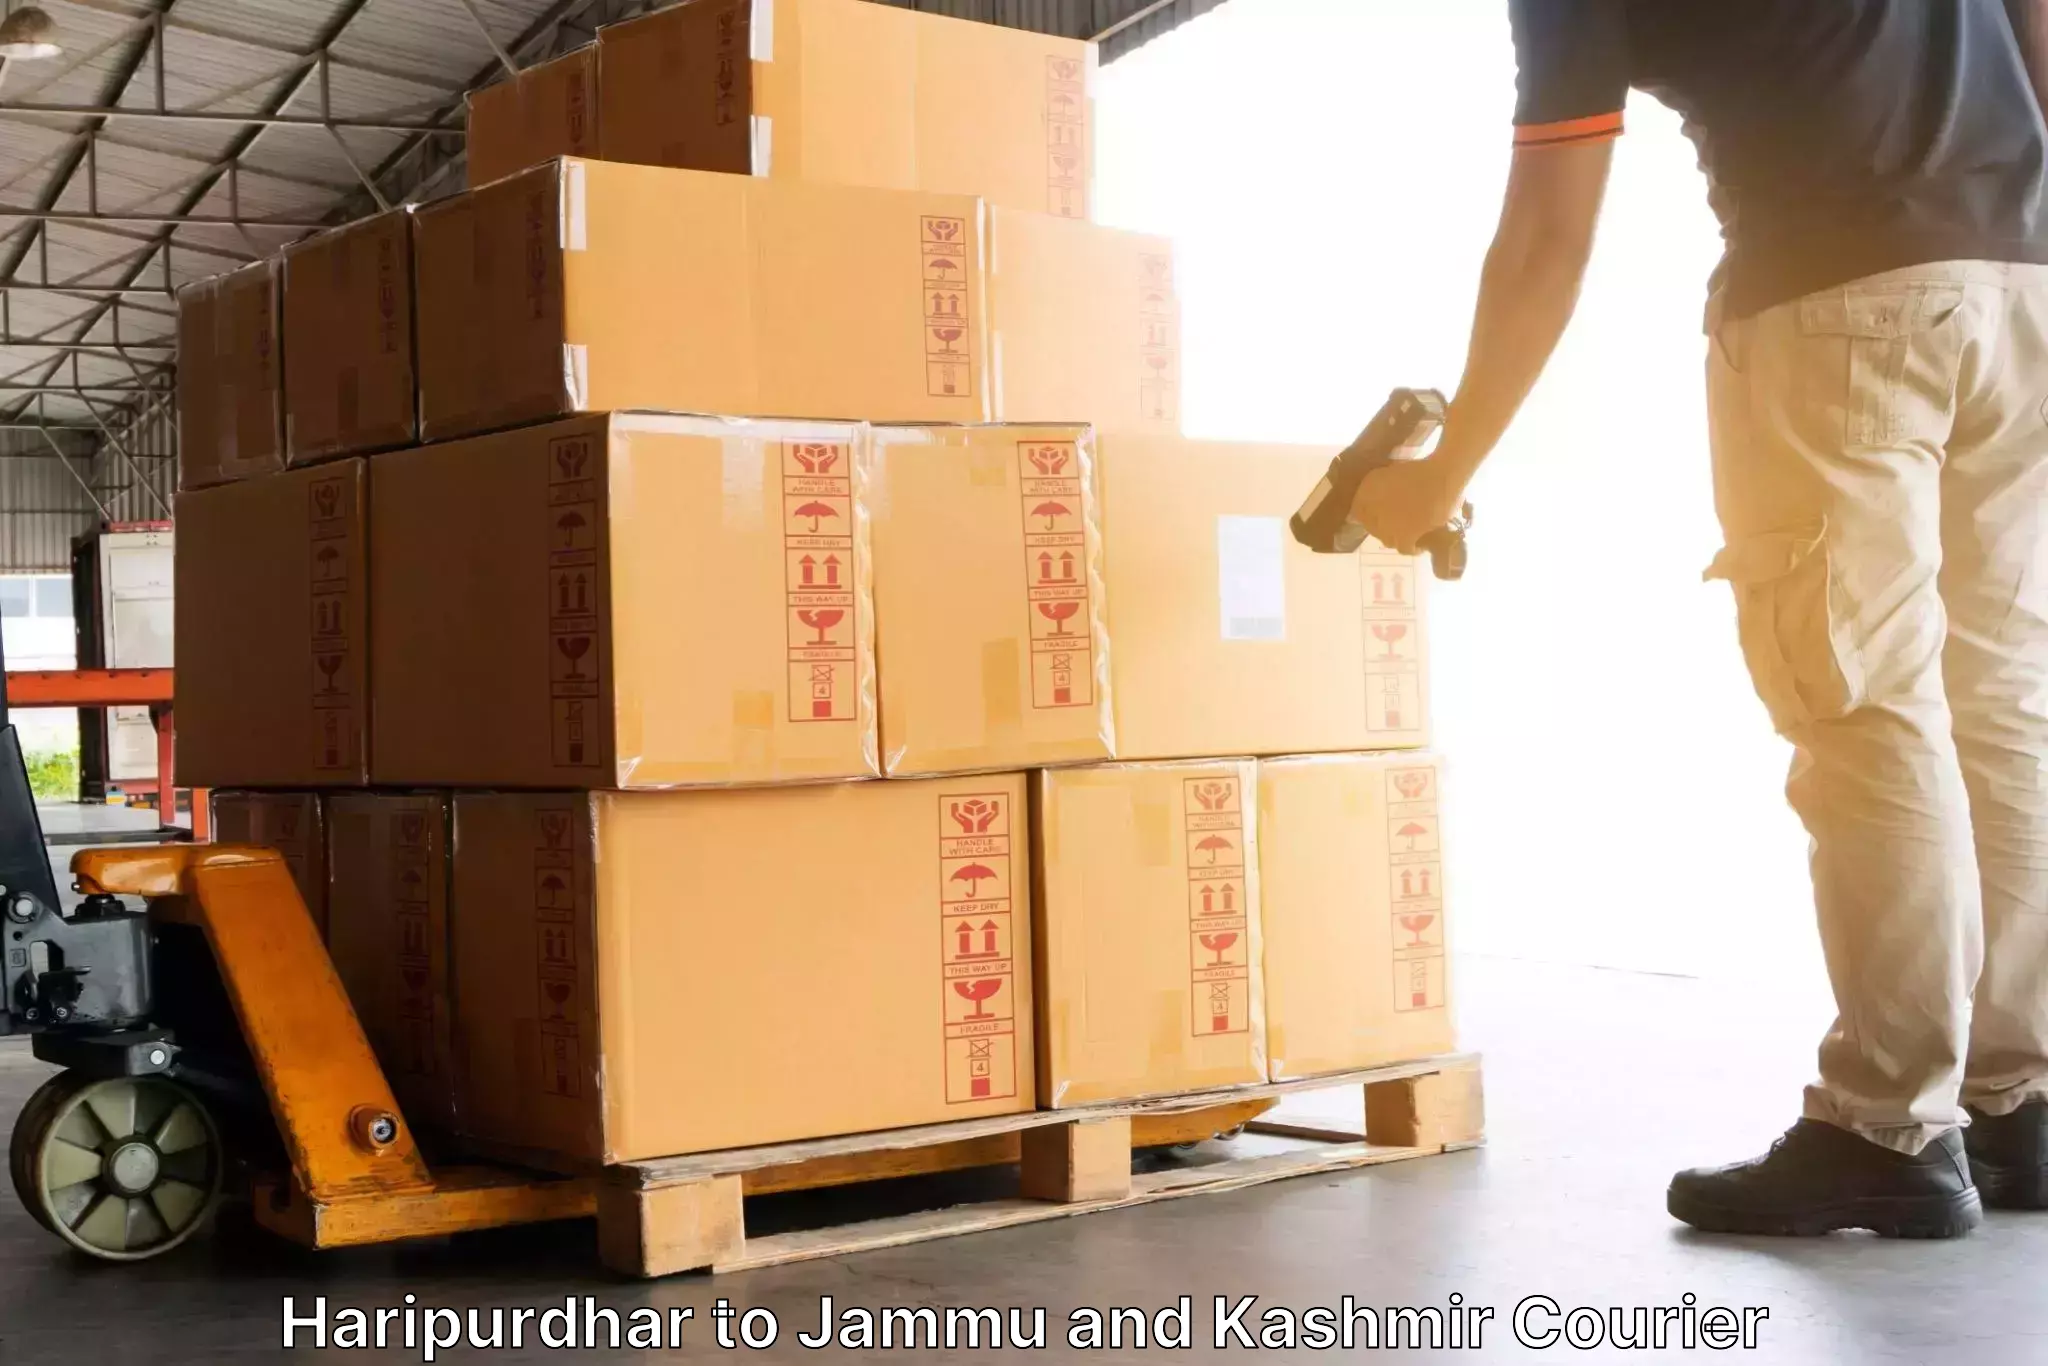 Nationwide delivery network Haripurdhar to Sunderbani